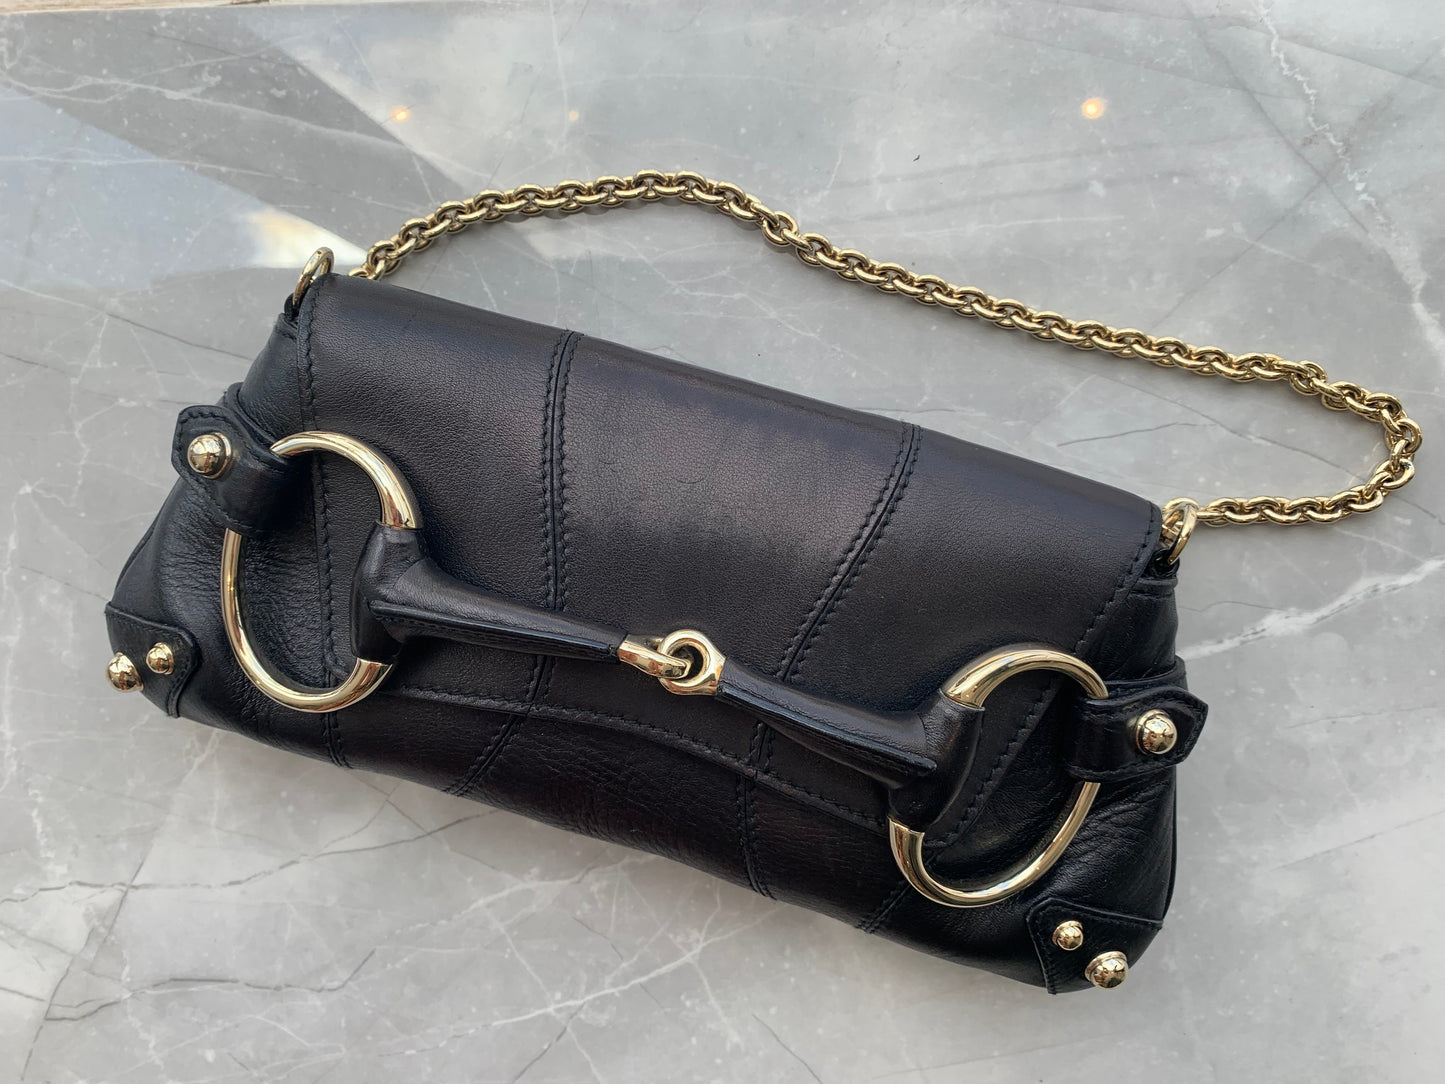 Gucci Horsebit Clutch Chain Bag